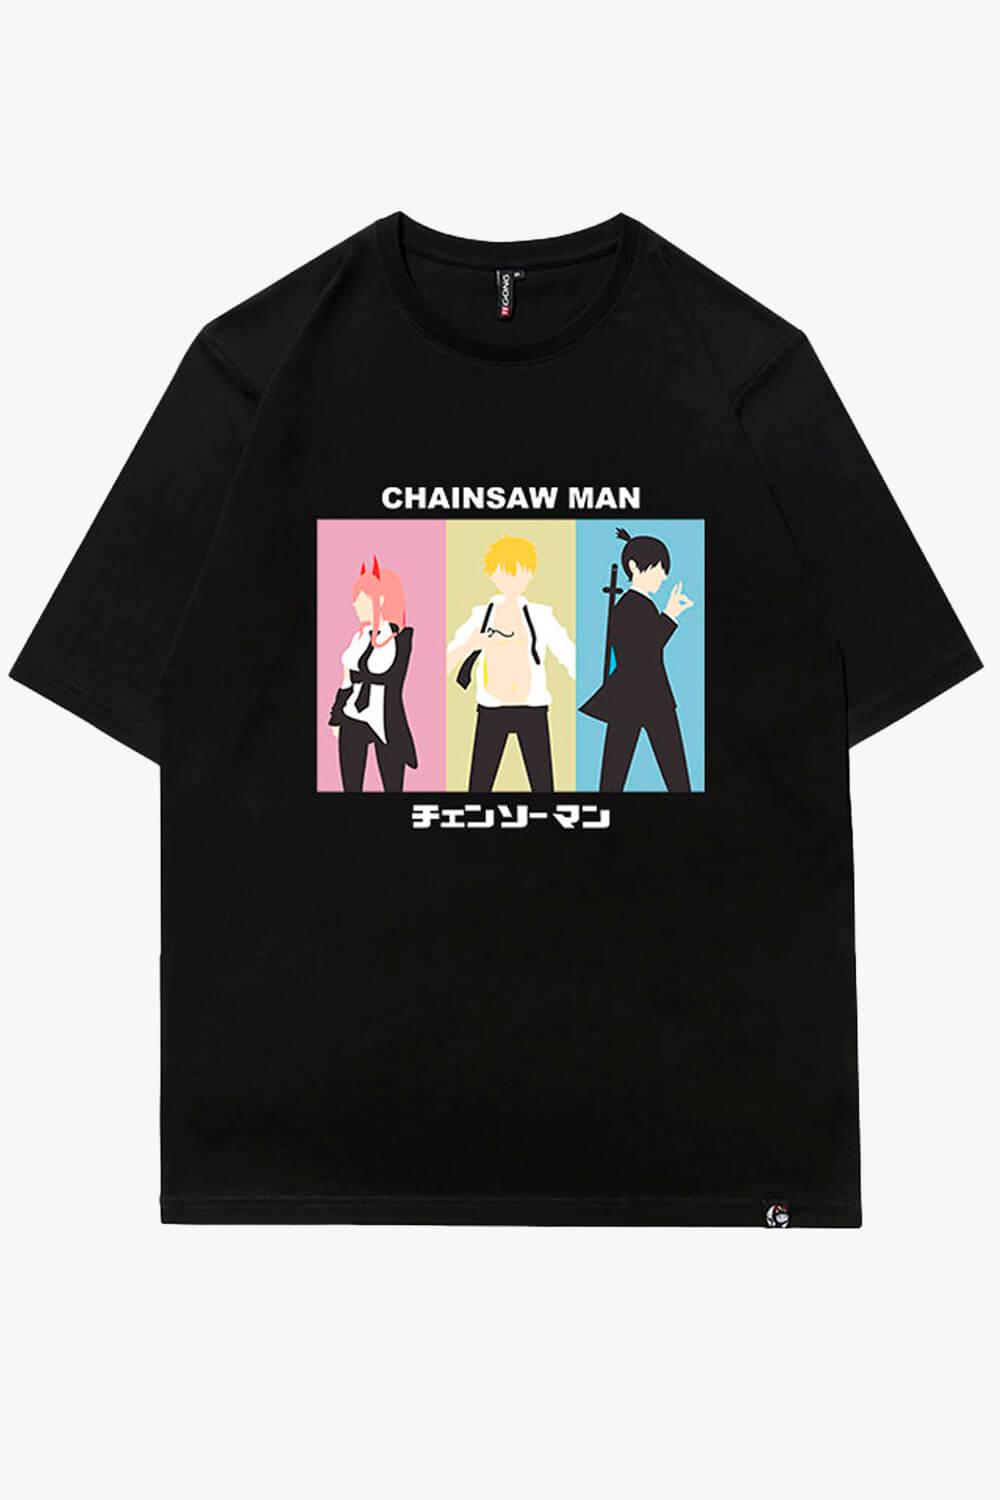 Chainsaw Man Minimalism Art T-Shirt - Aesthetic Clothes Shop